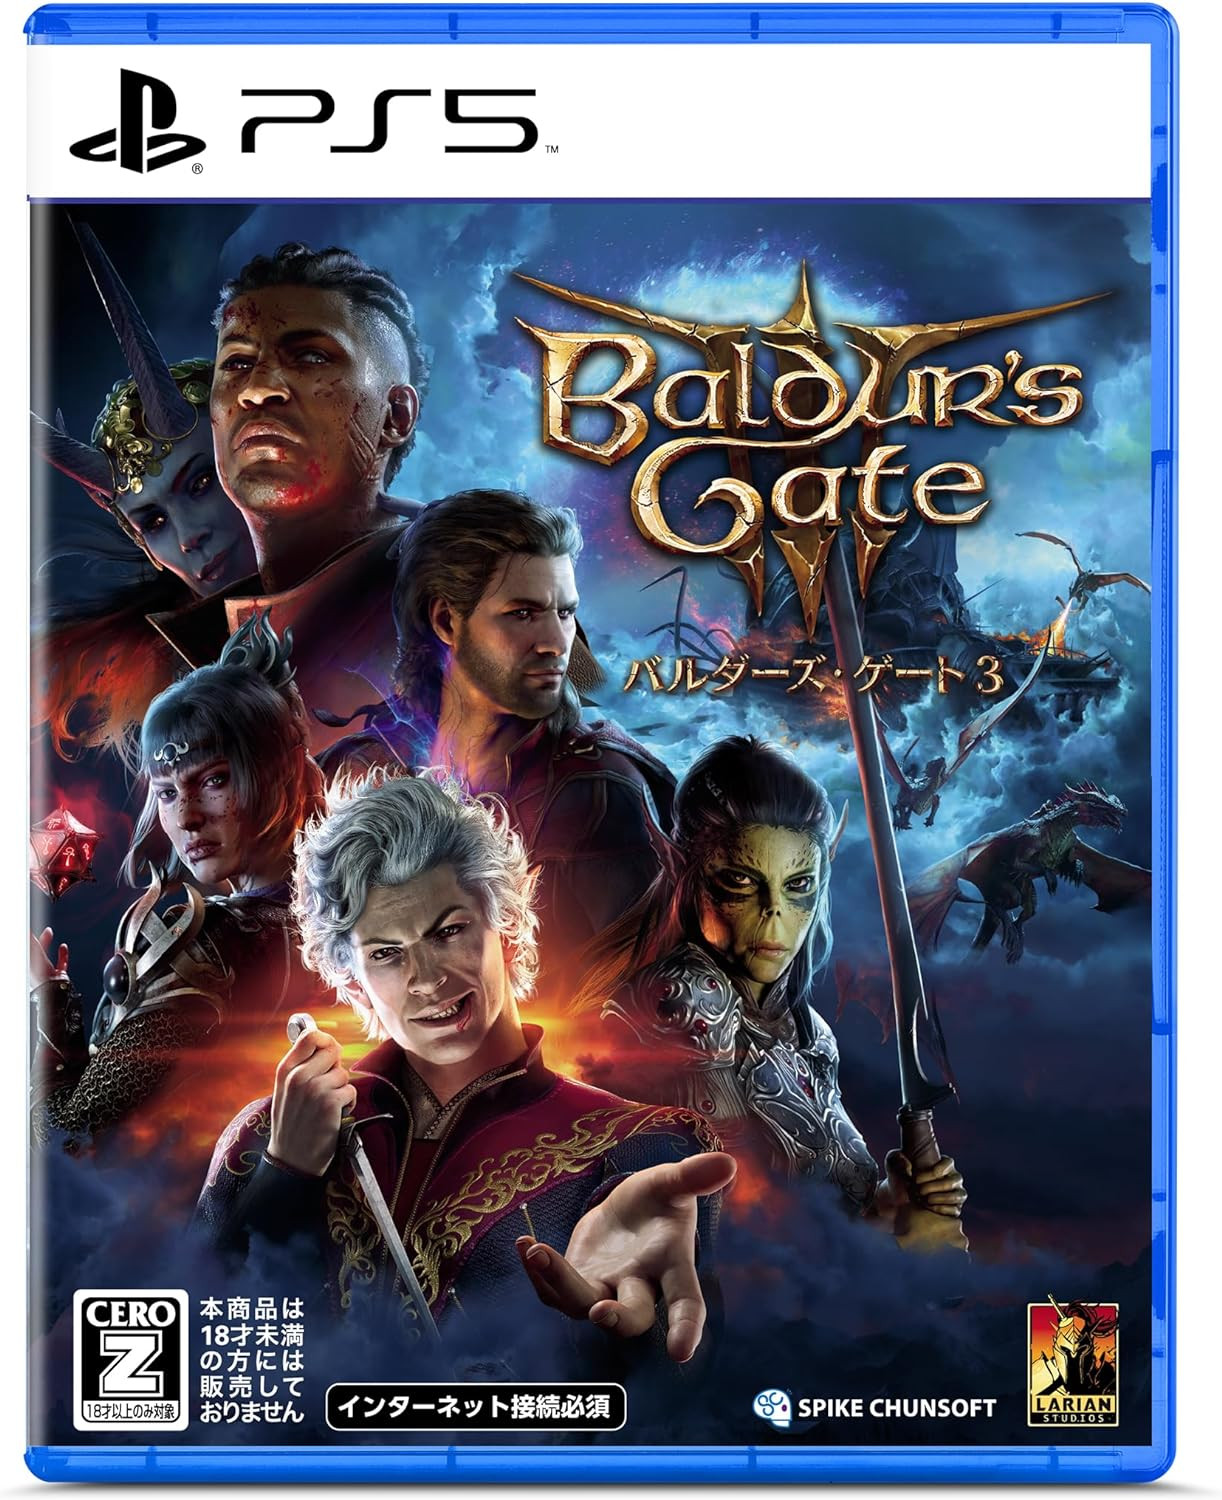 Baldur's Gate 3 (Japan Import) (PS5), Spike Chunsoft